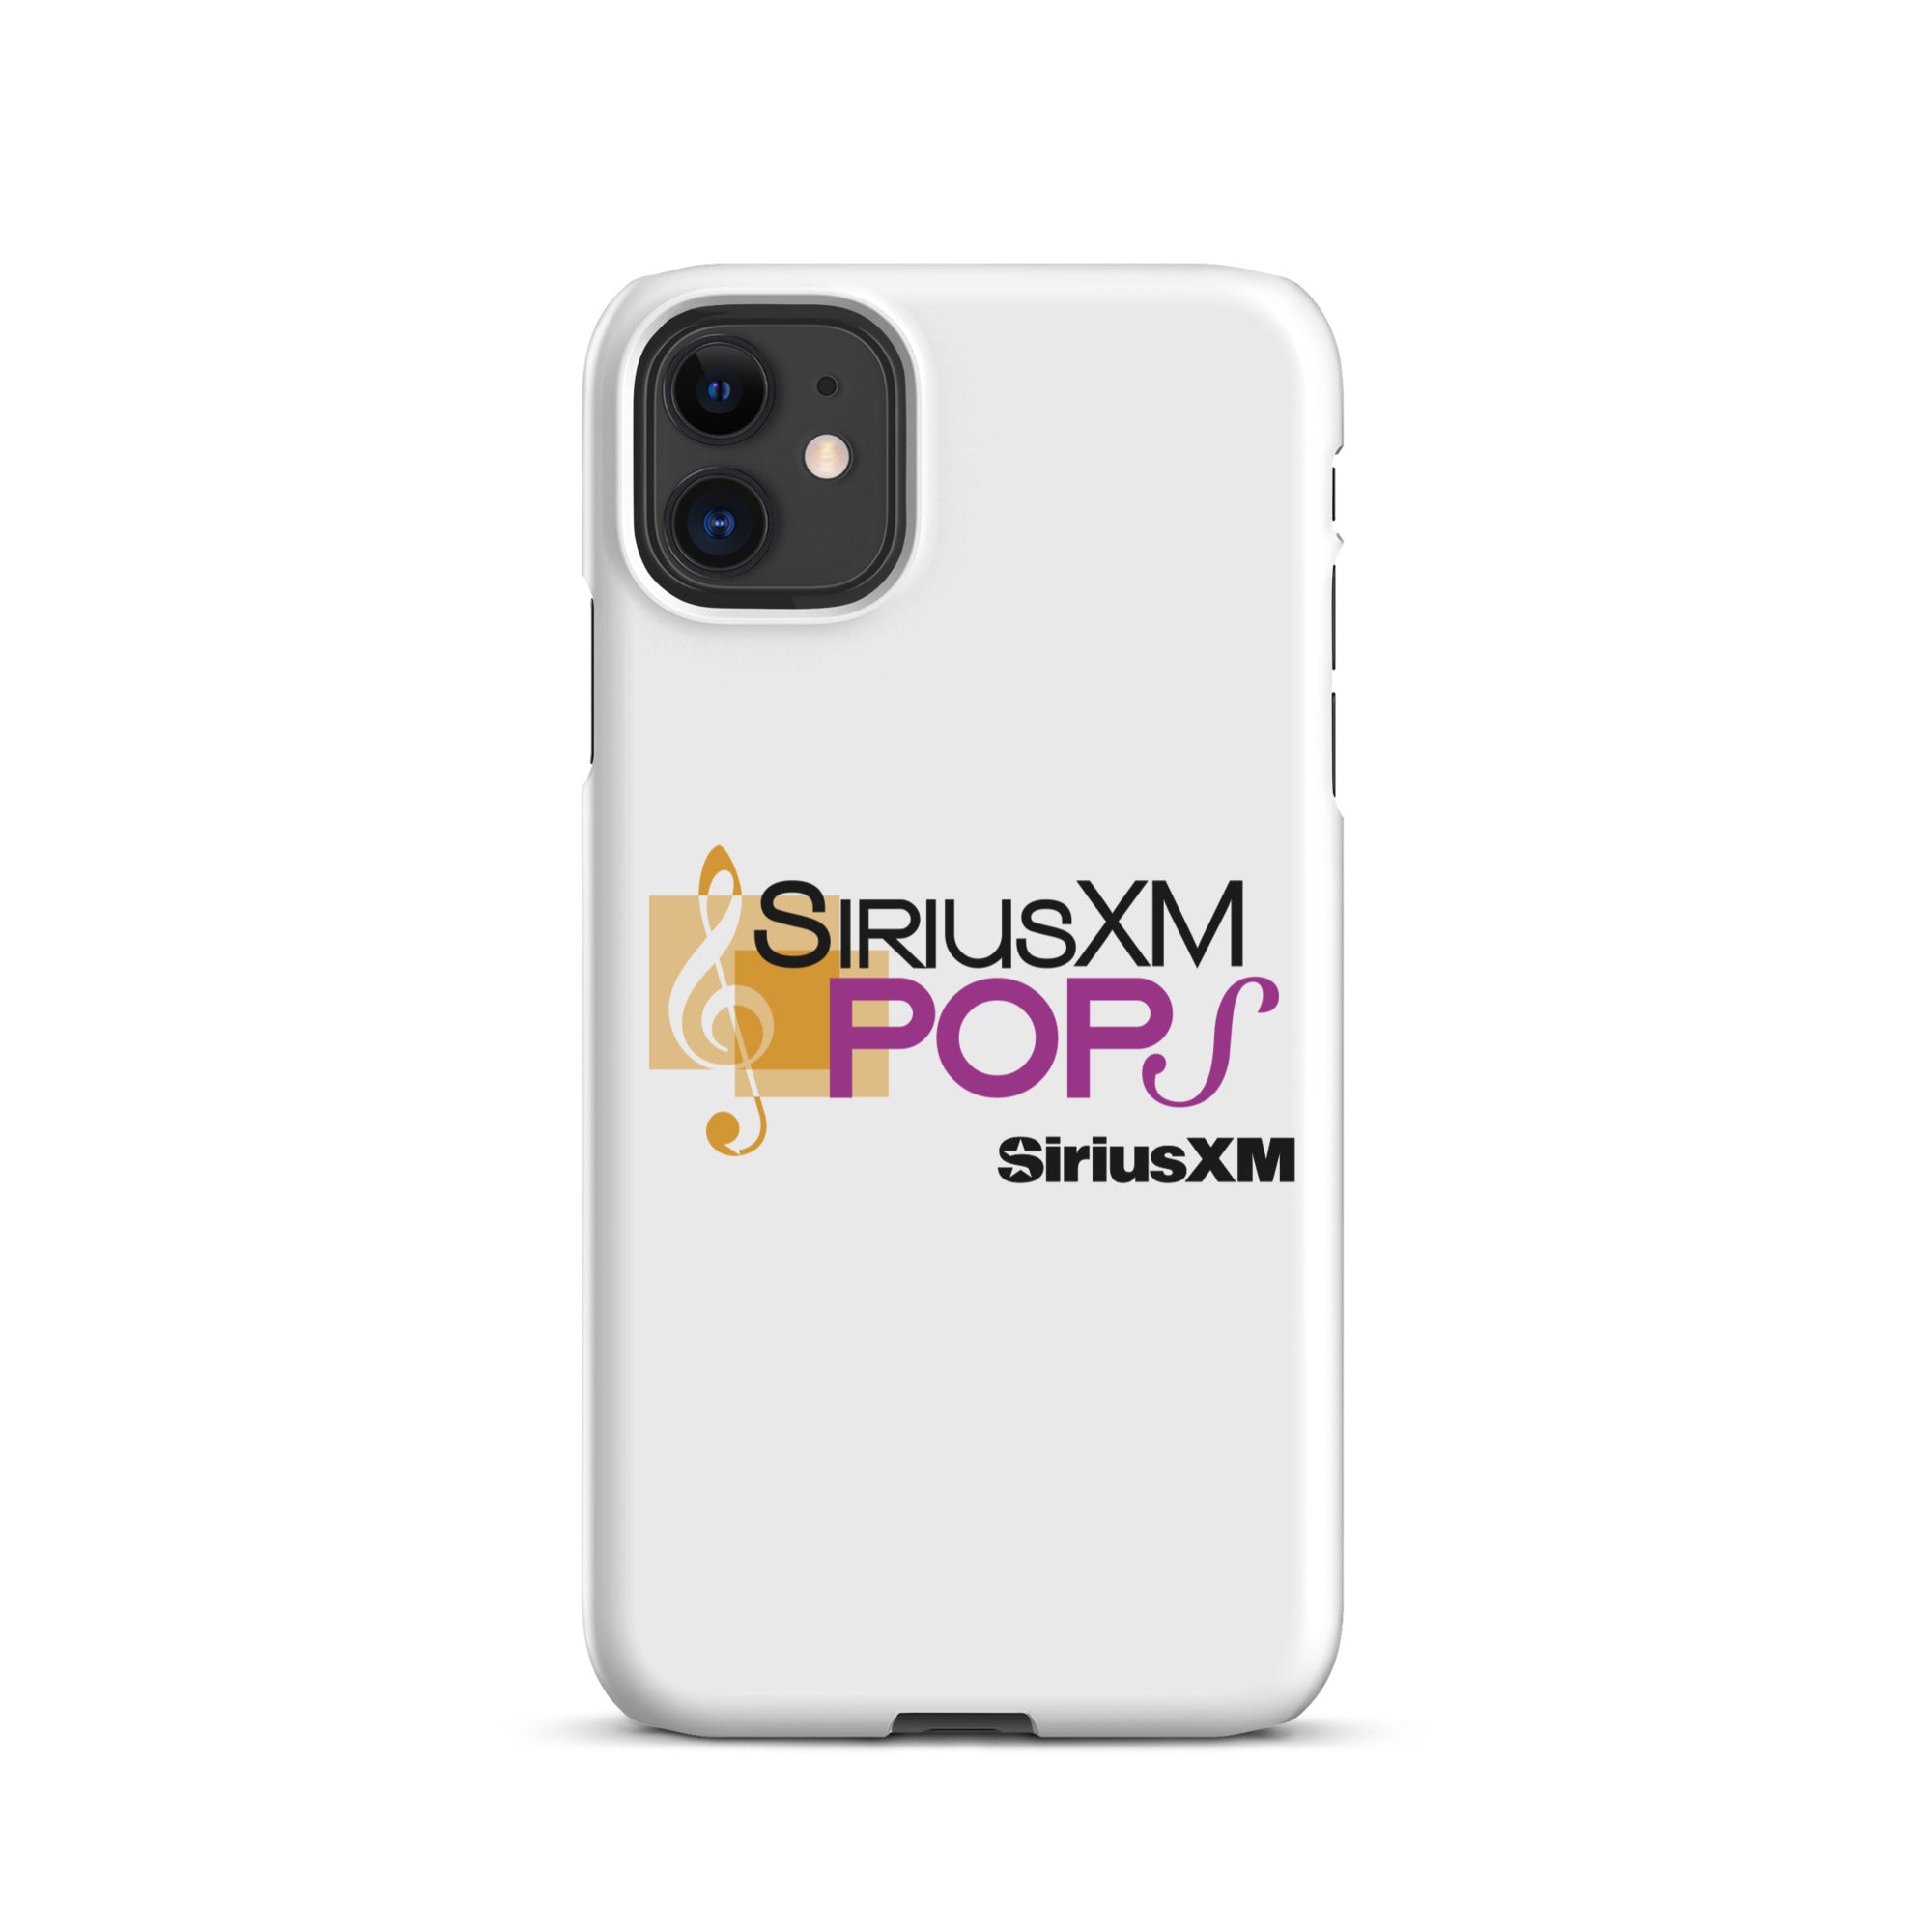 SiriusXM Pops: iPhone® Snap Case